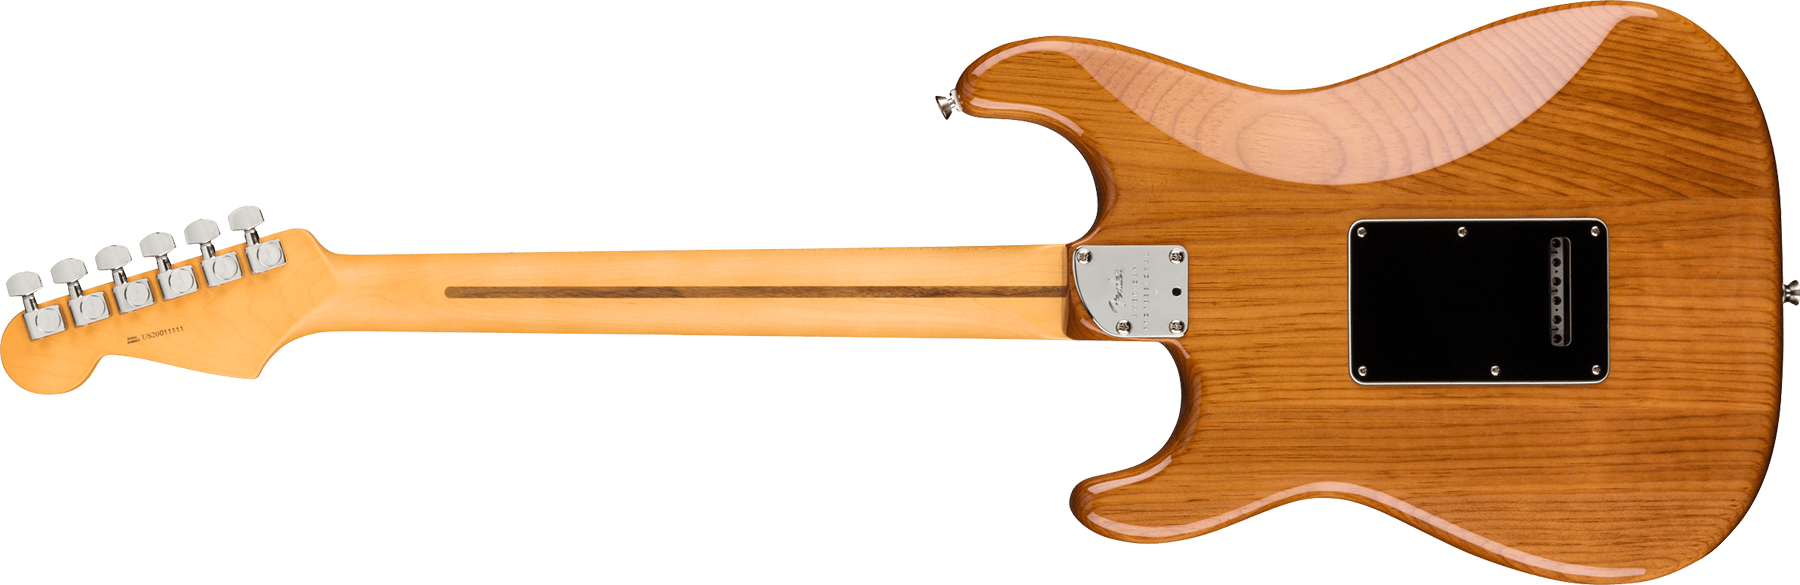 Fender Strat American Professional Ii Hss Usa Mn - Roasted Pine - Guitarra eléctrica con forma de str. - Variation 1